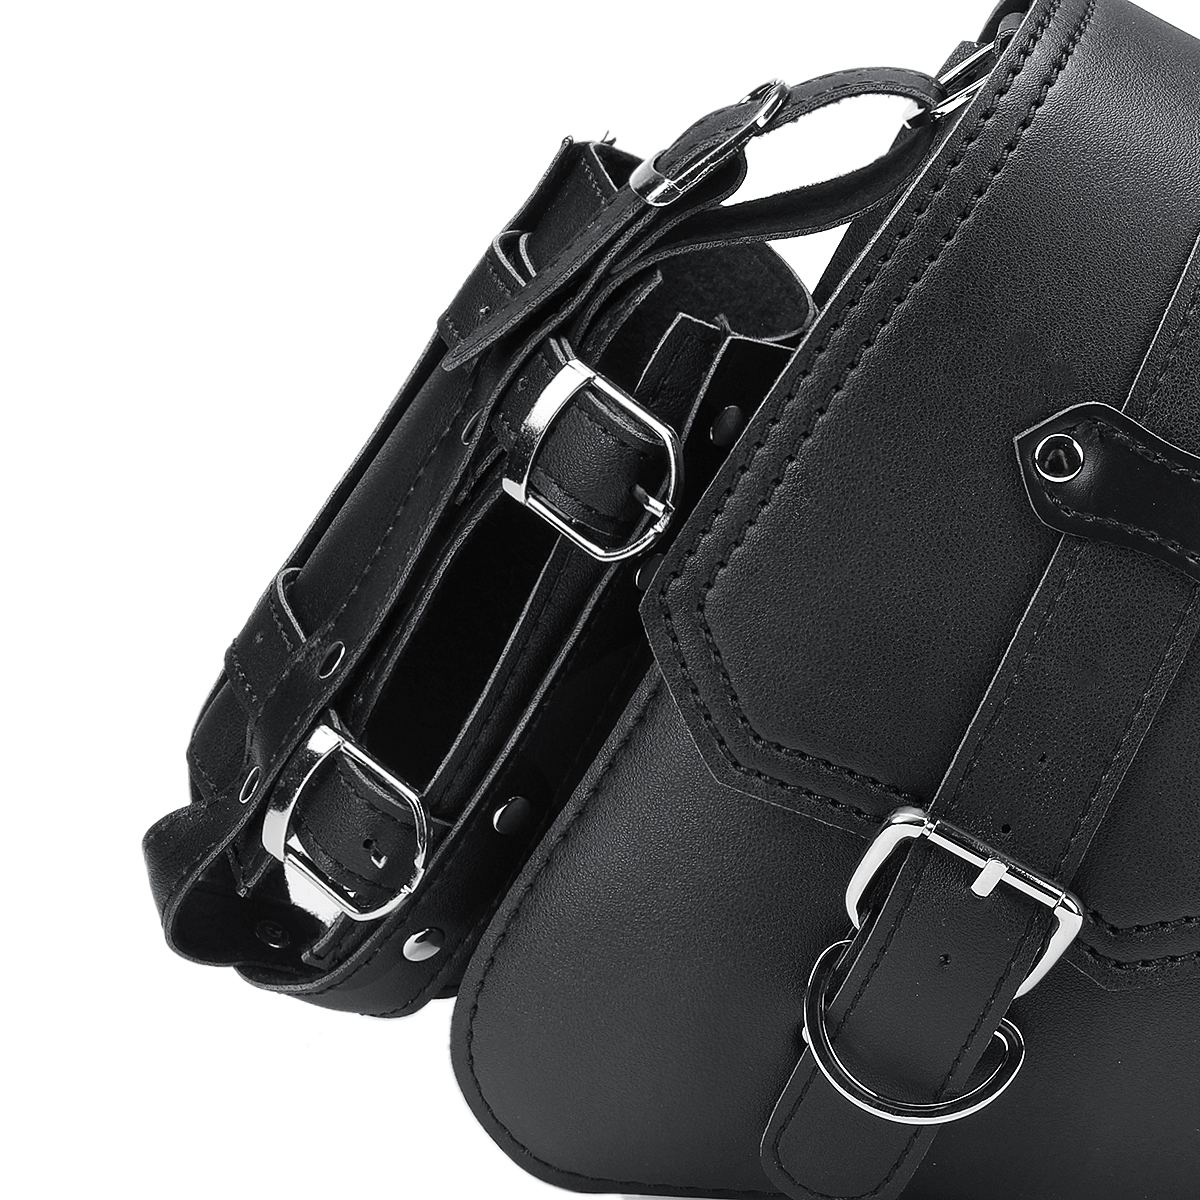 Universal Motorcycle Saddlebags Saddle Bag Black Leather for XL883 XL1200 04-UP